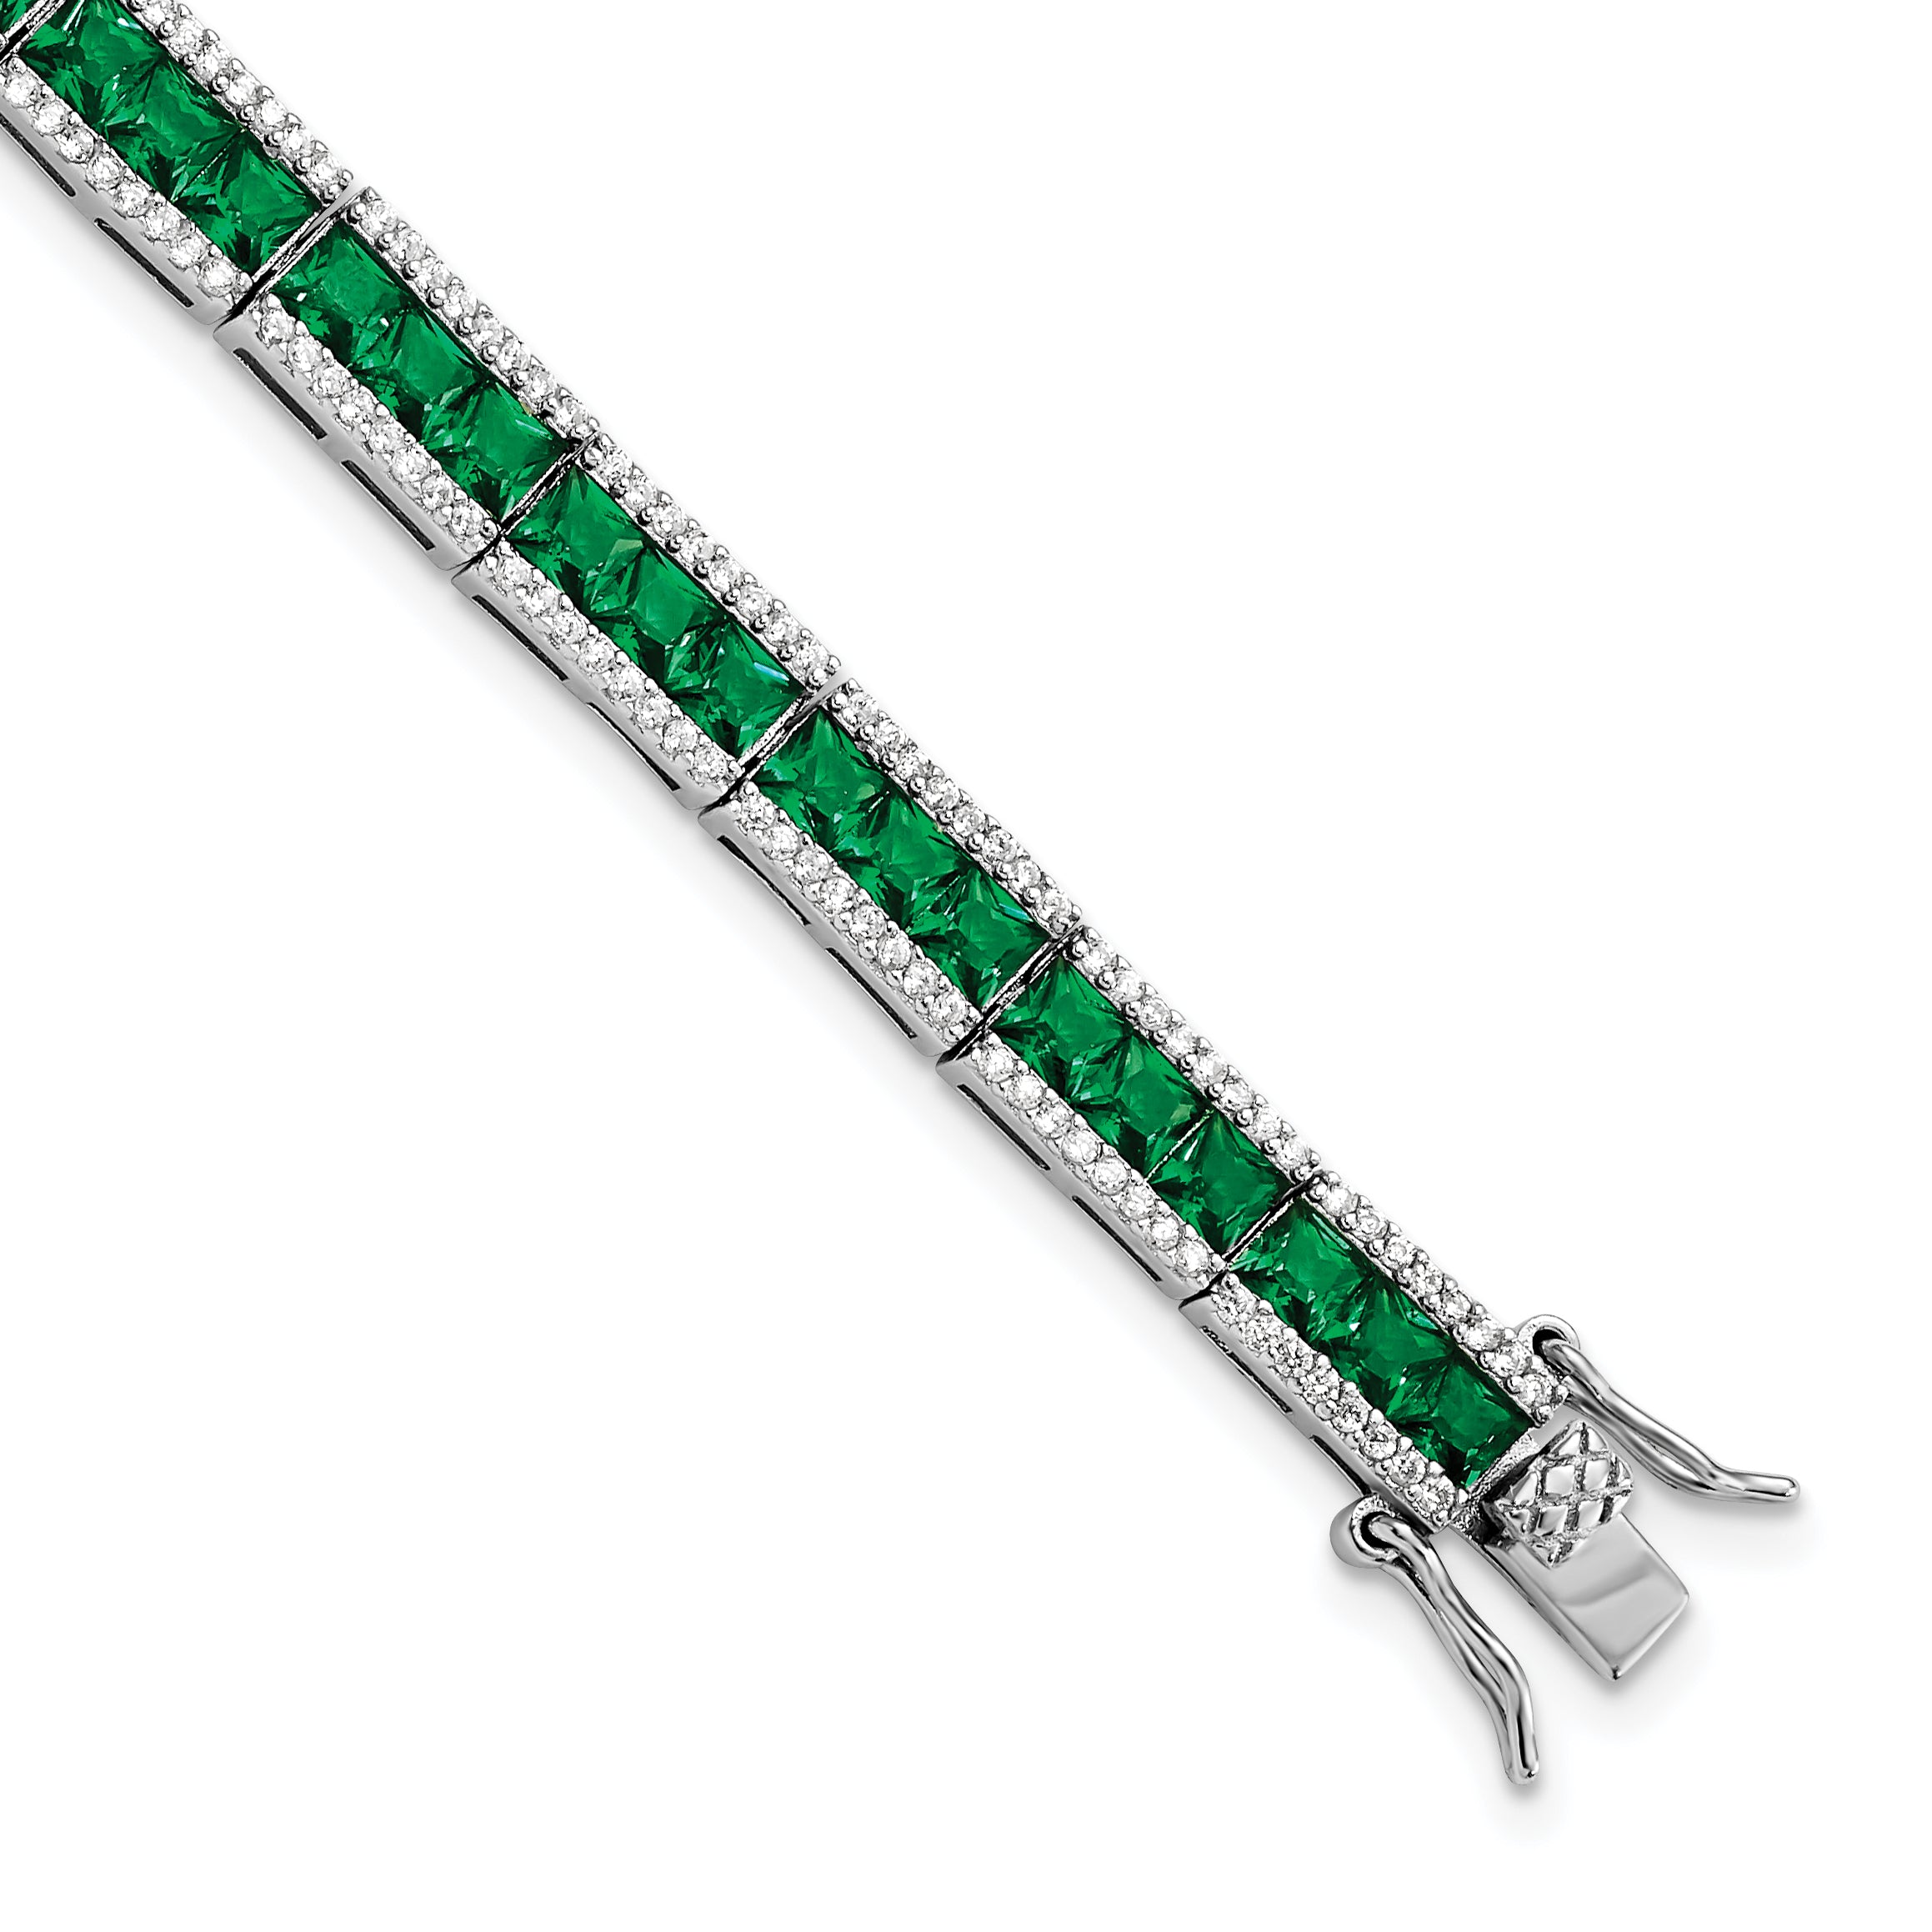 Cheryl M Sterling Silver Rhodium-plated Princess-cut Green Nano Crystal and Brilliant-cut White CZ 7.25 Inch Bracelet